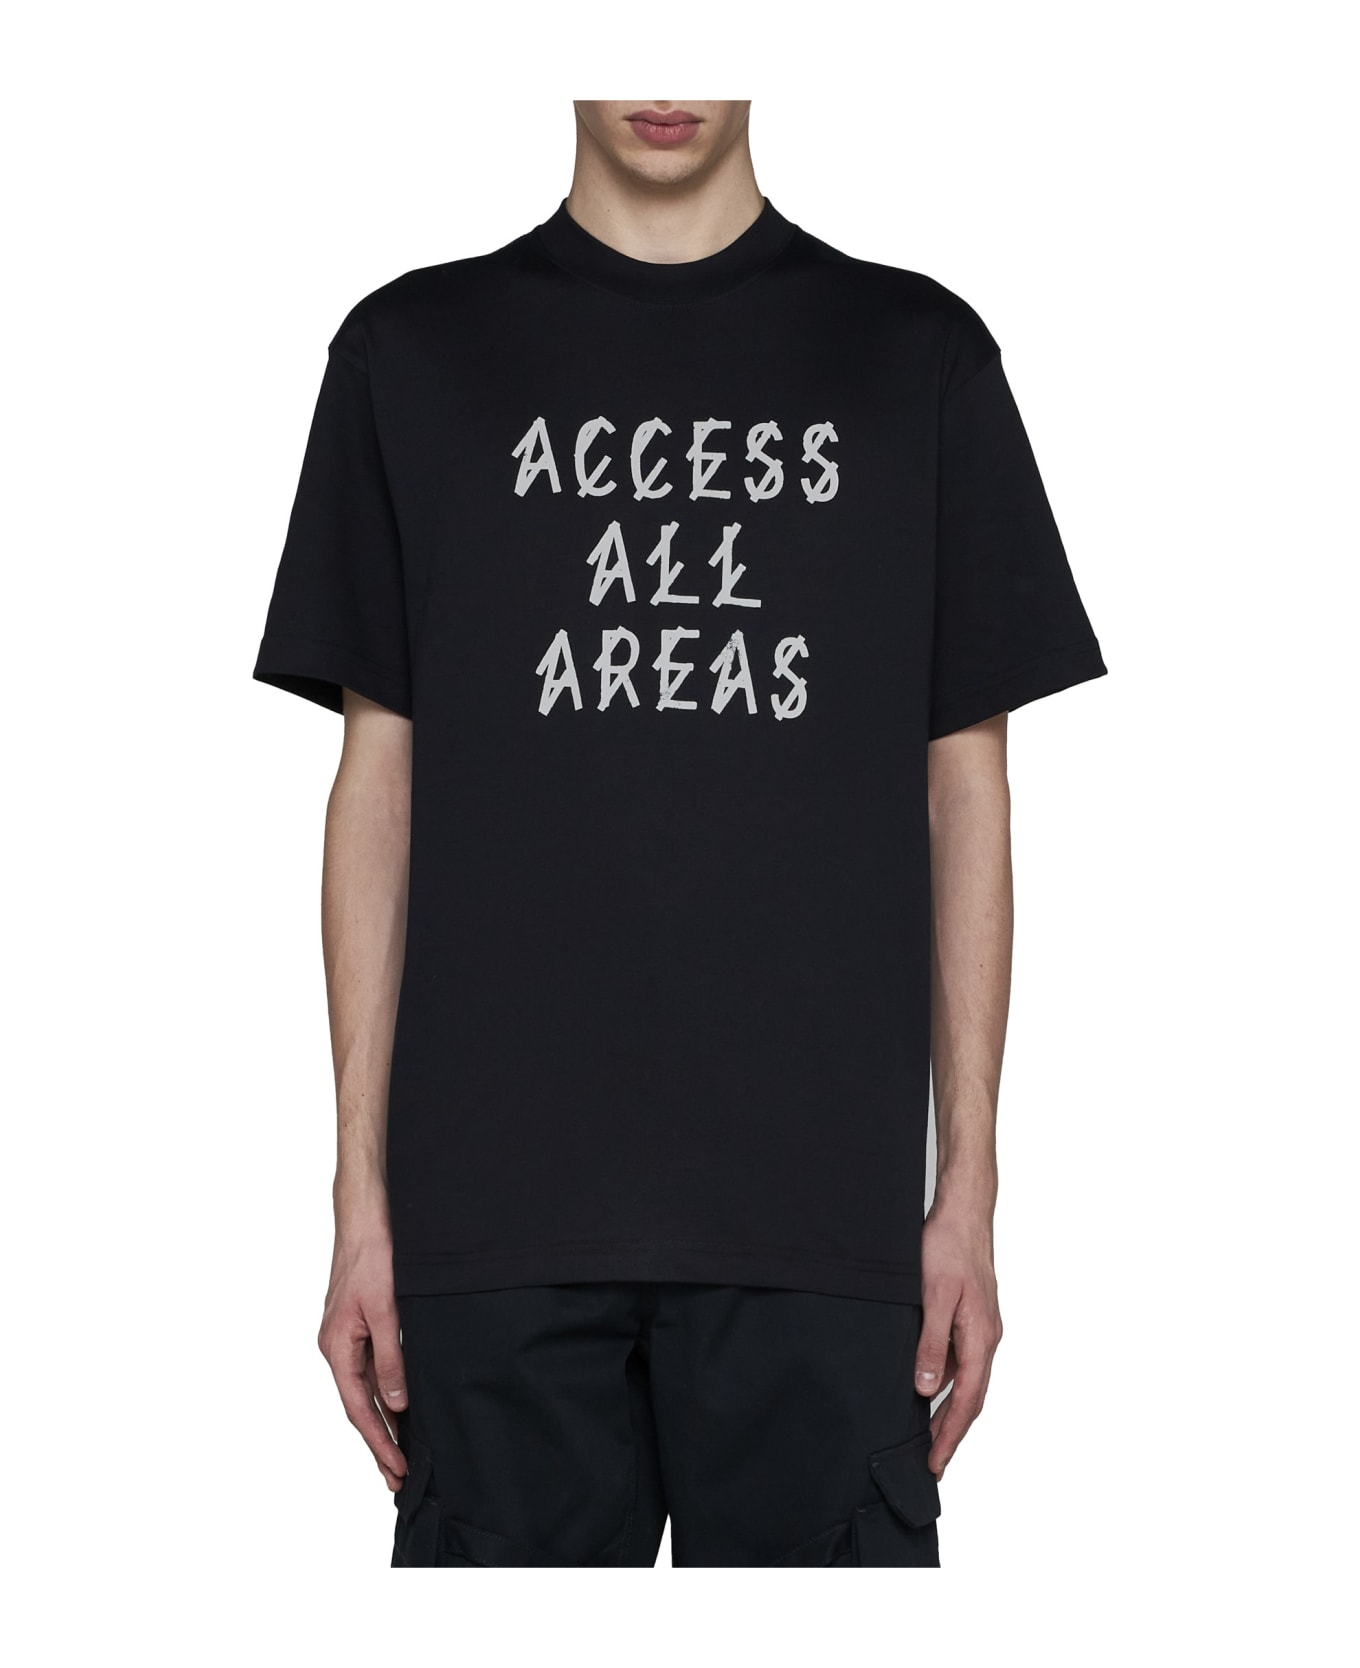 44 Label Group T-Shirt - Black+aaa print シャツ